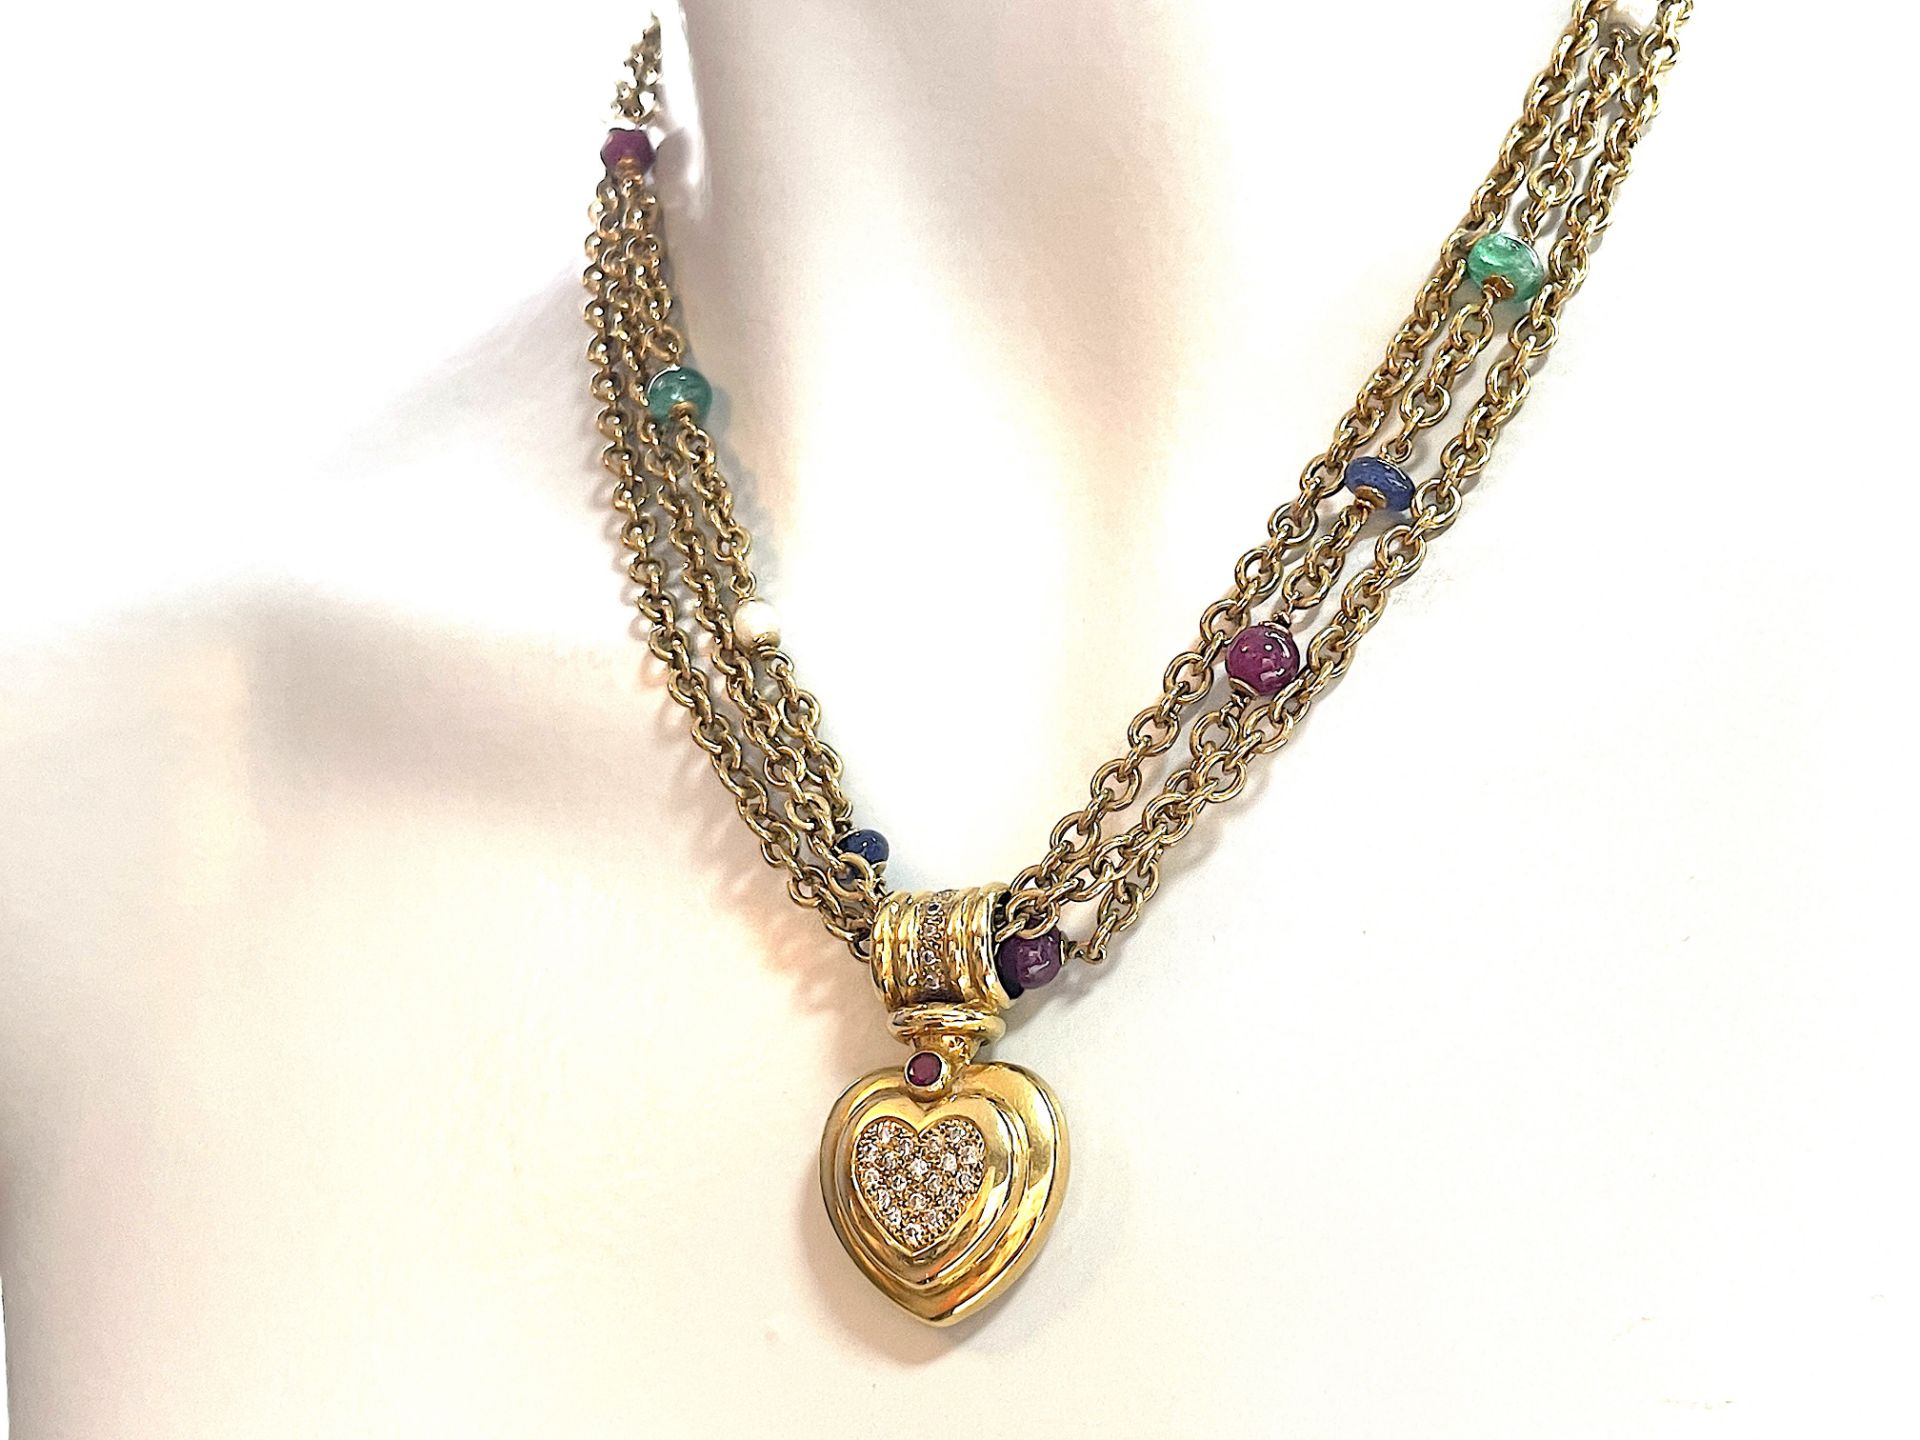 3 strands gemstone necklace with diamond heart